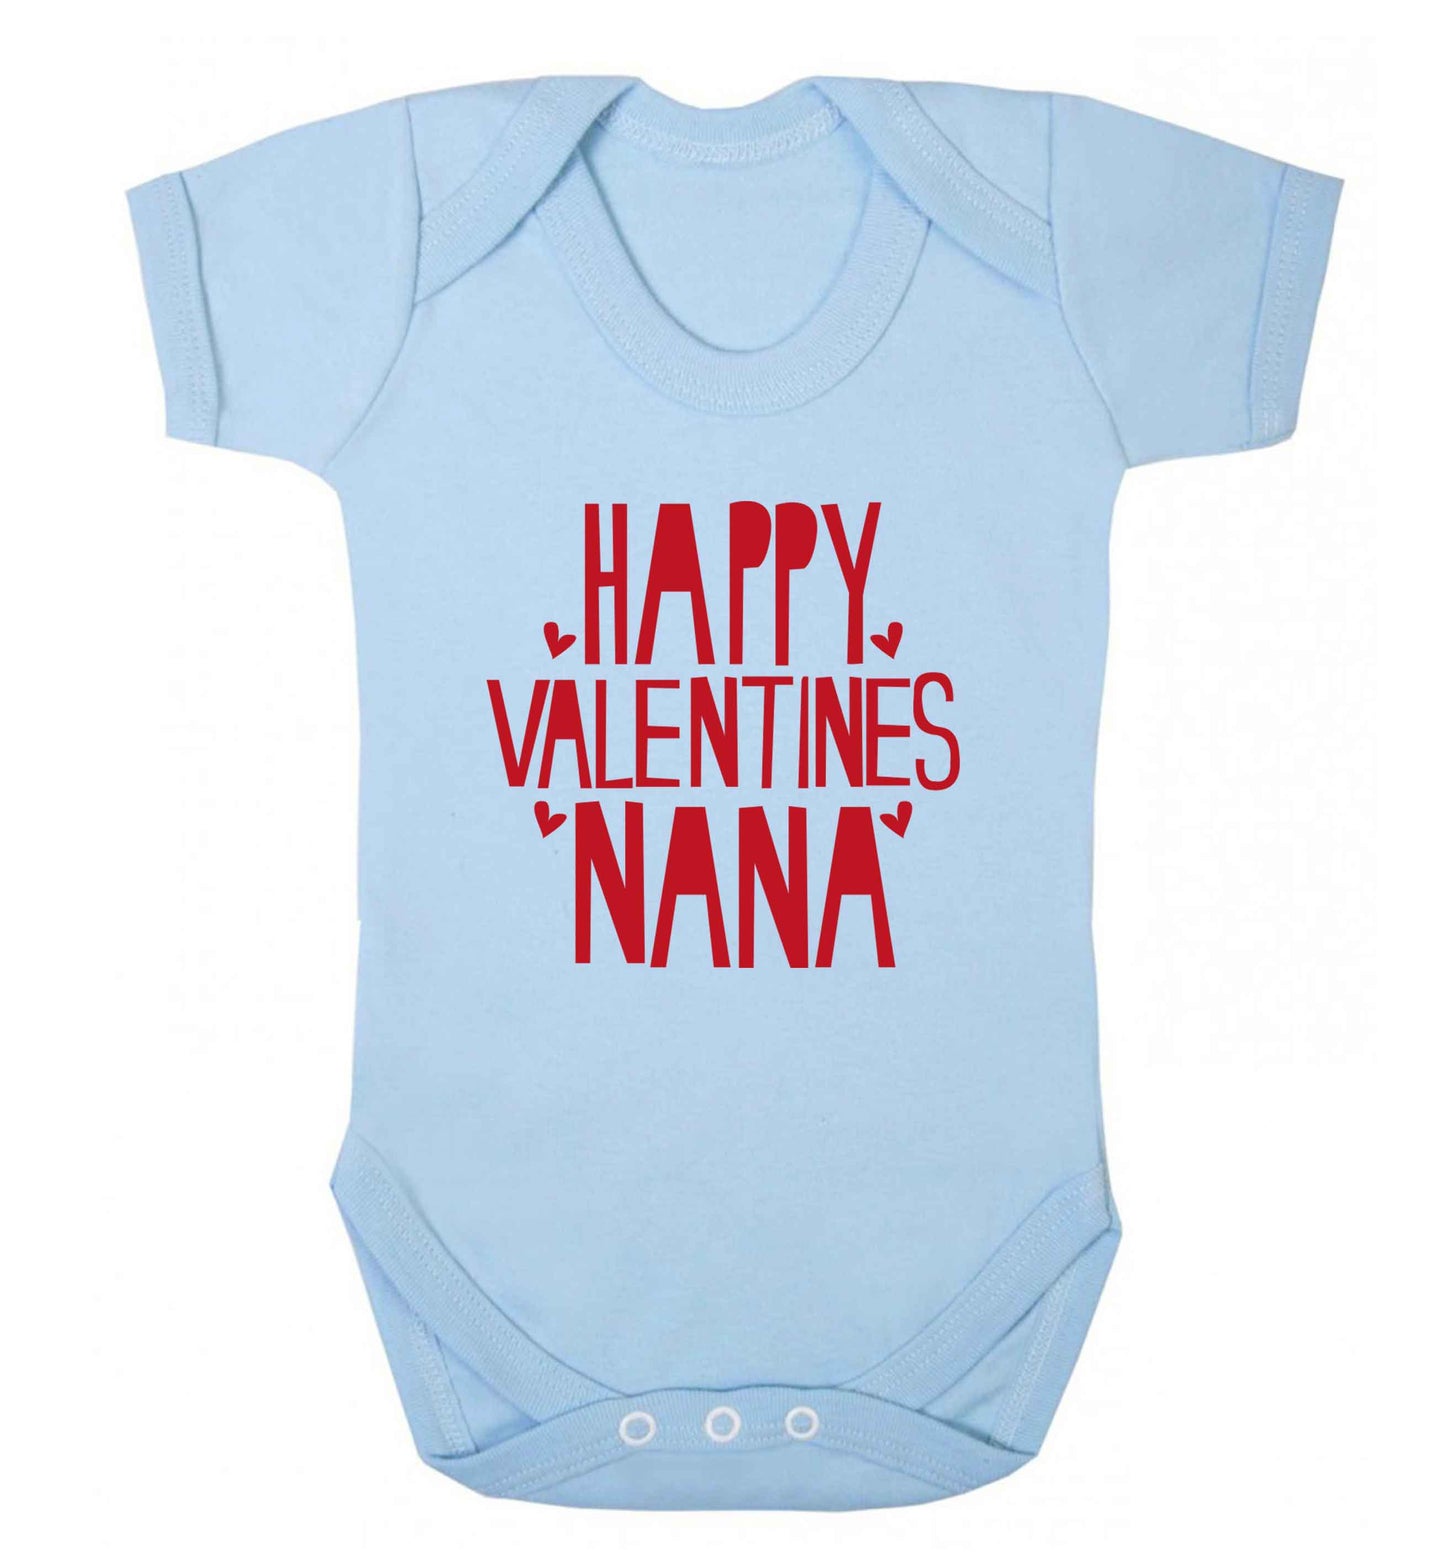 Happy valentines nana baby vest pale blue 18-24 months